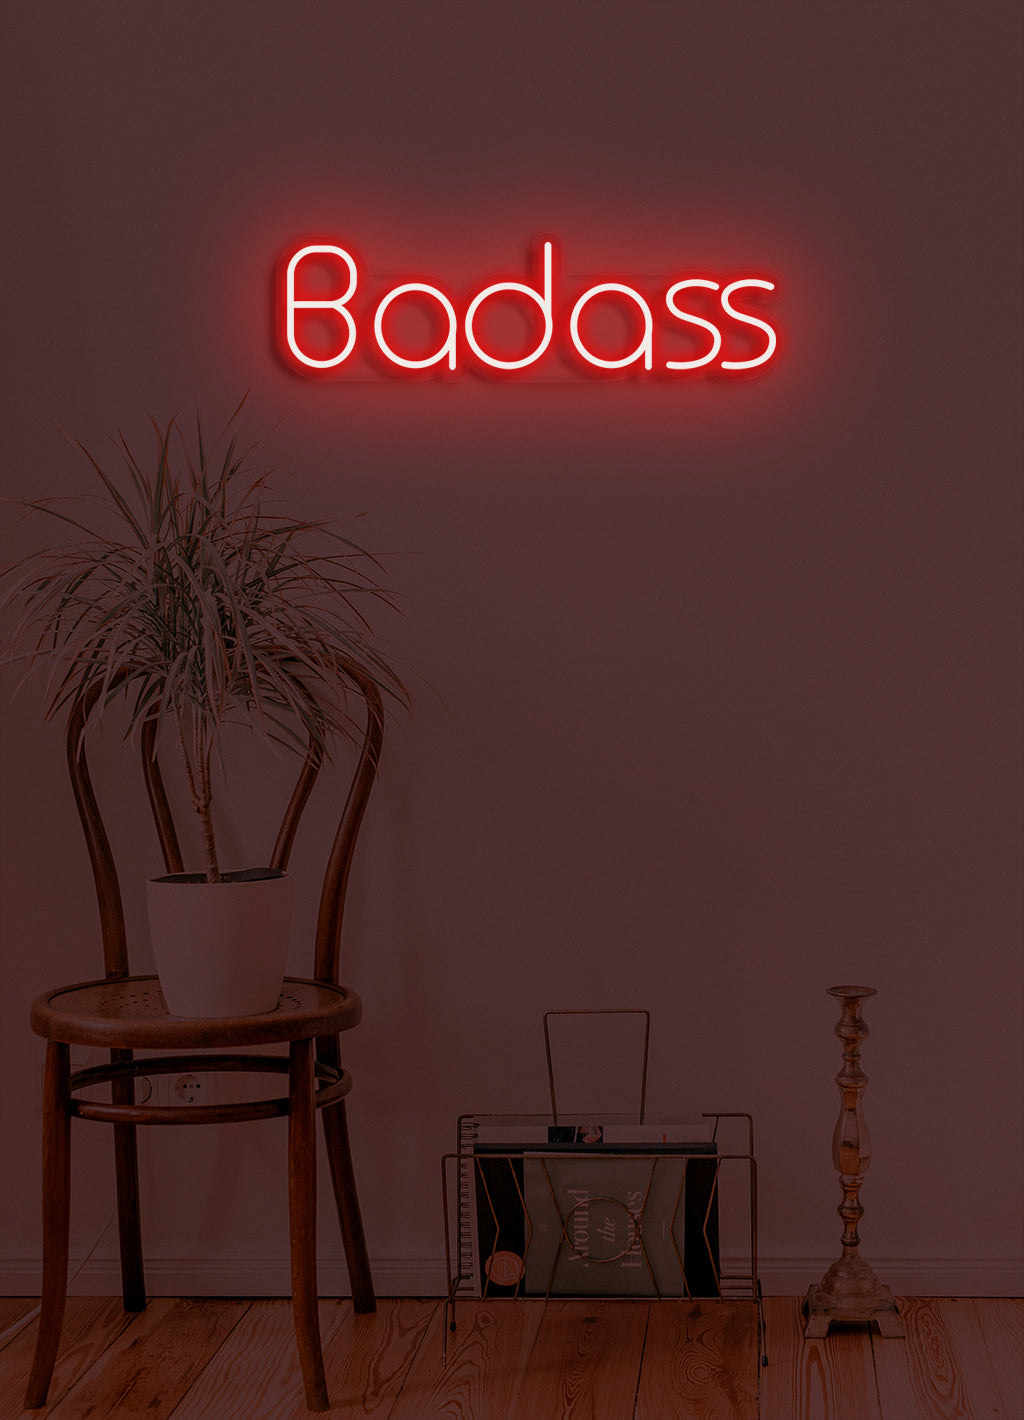 Badass - LED Neon skilt